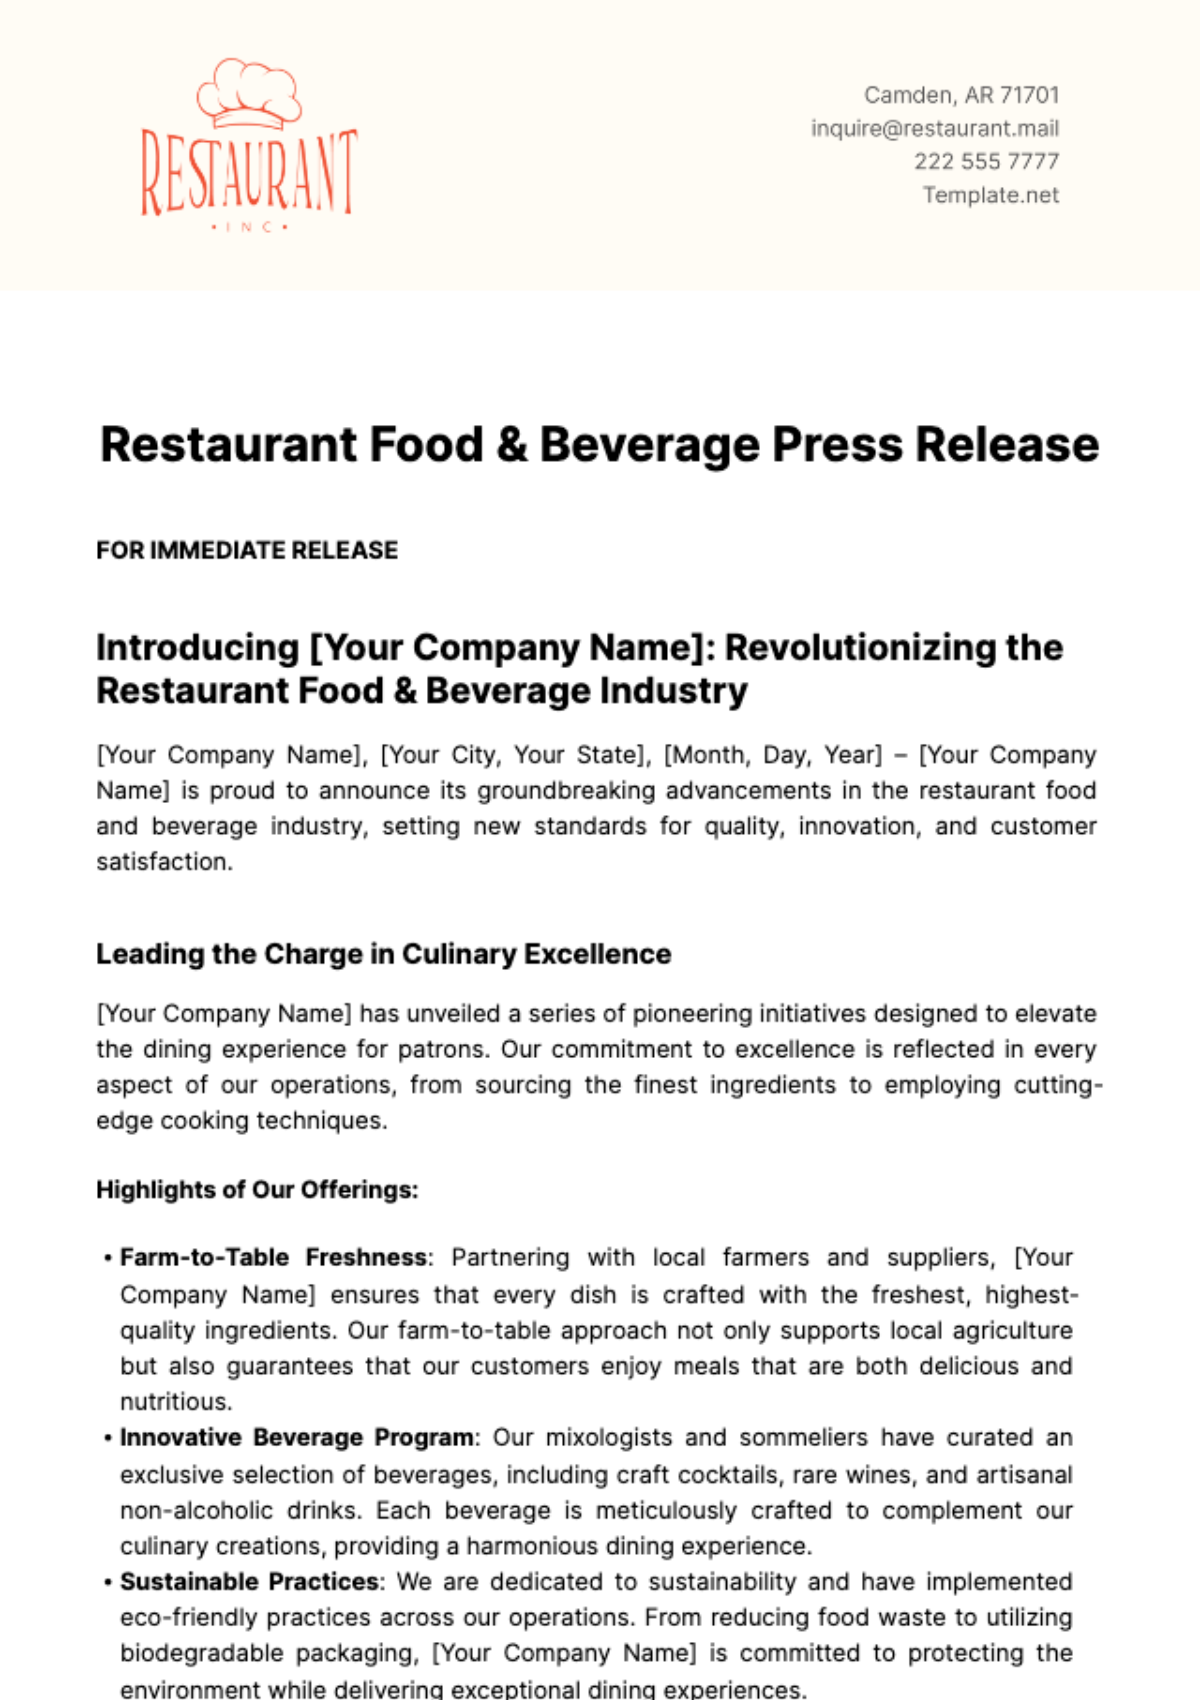 Free Restaurant Food & Beverage Press Release Template